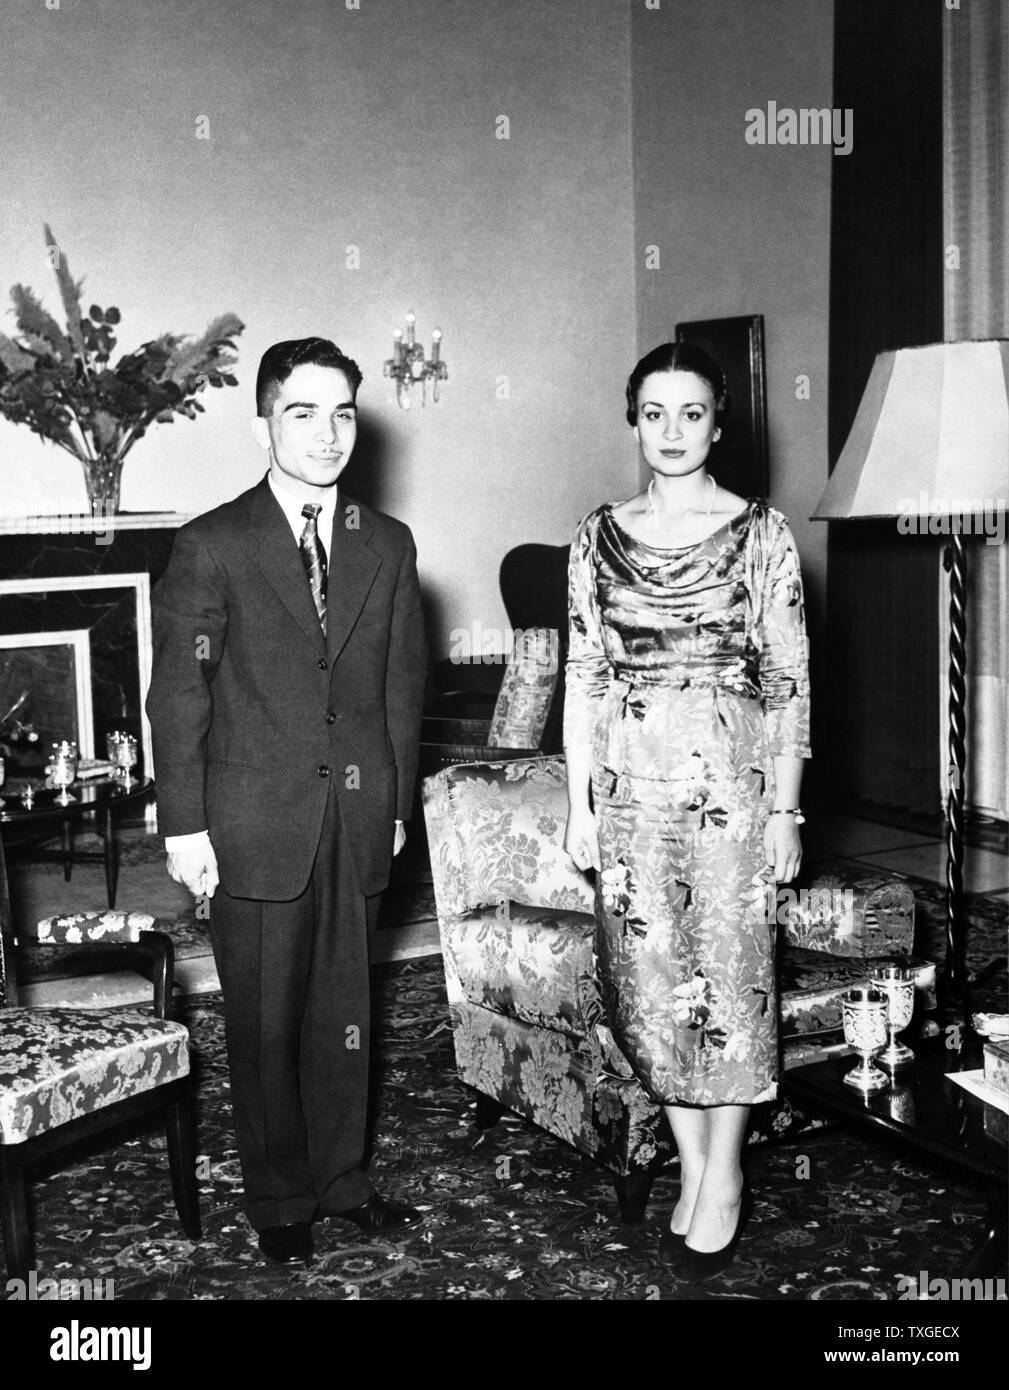 Pre-Wedding photograph of King Hussein of Jordan and Princess Dina bint 'Abdul-Hamid. Dated 1955 Stock Photo